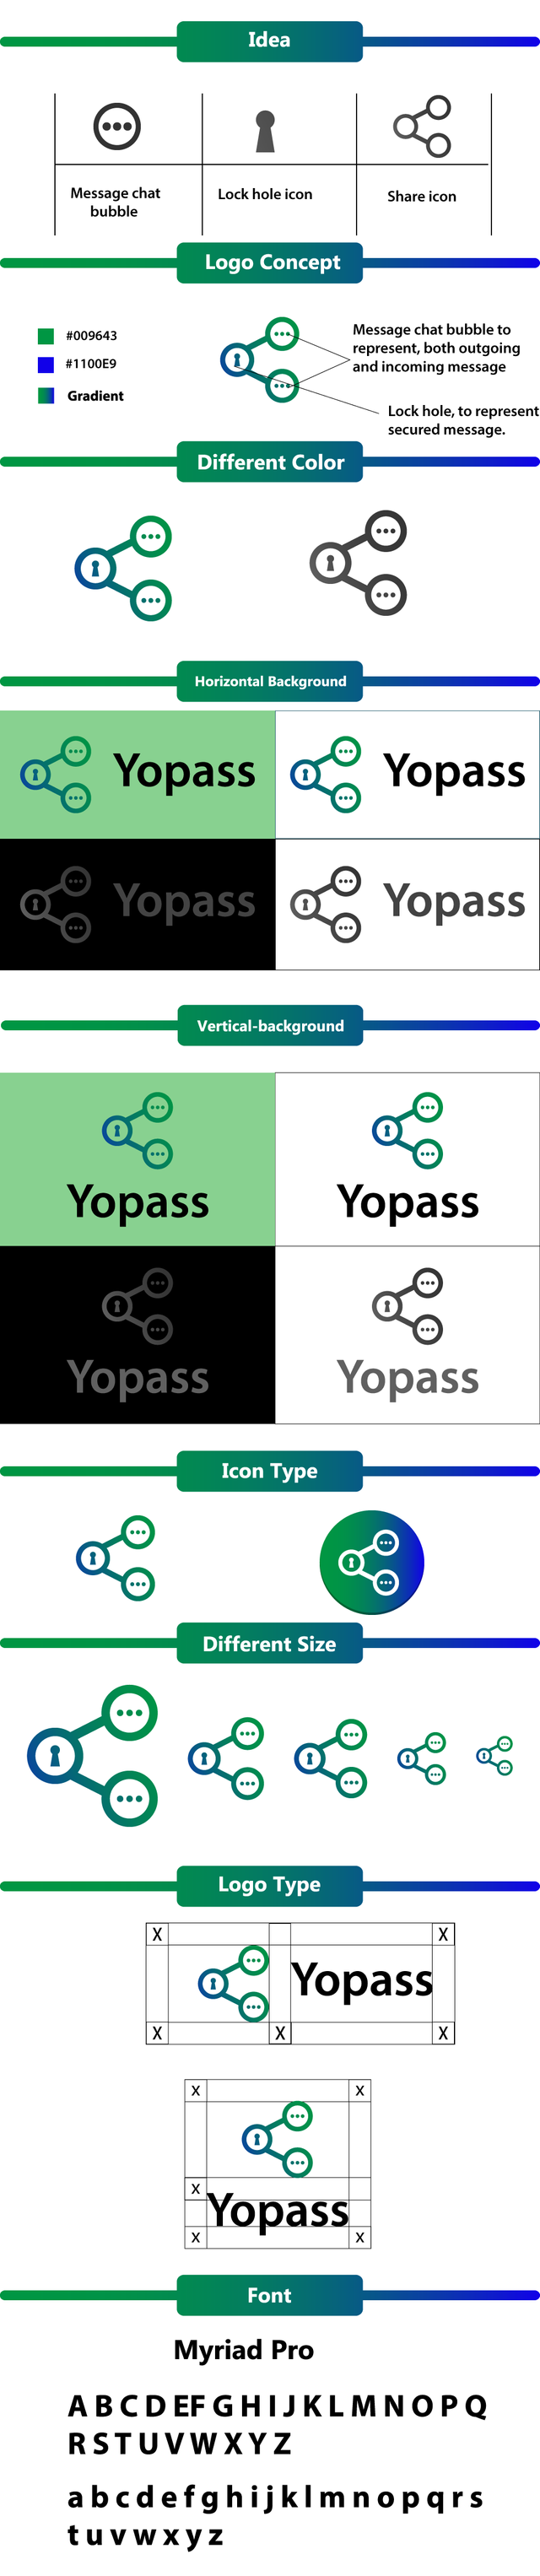 Yopass-presentation-1.png